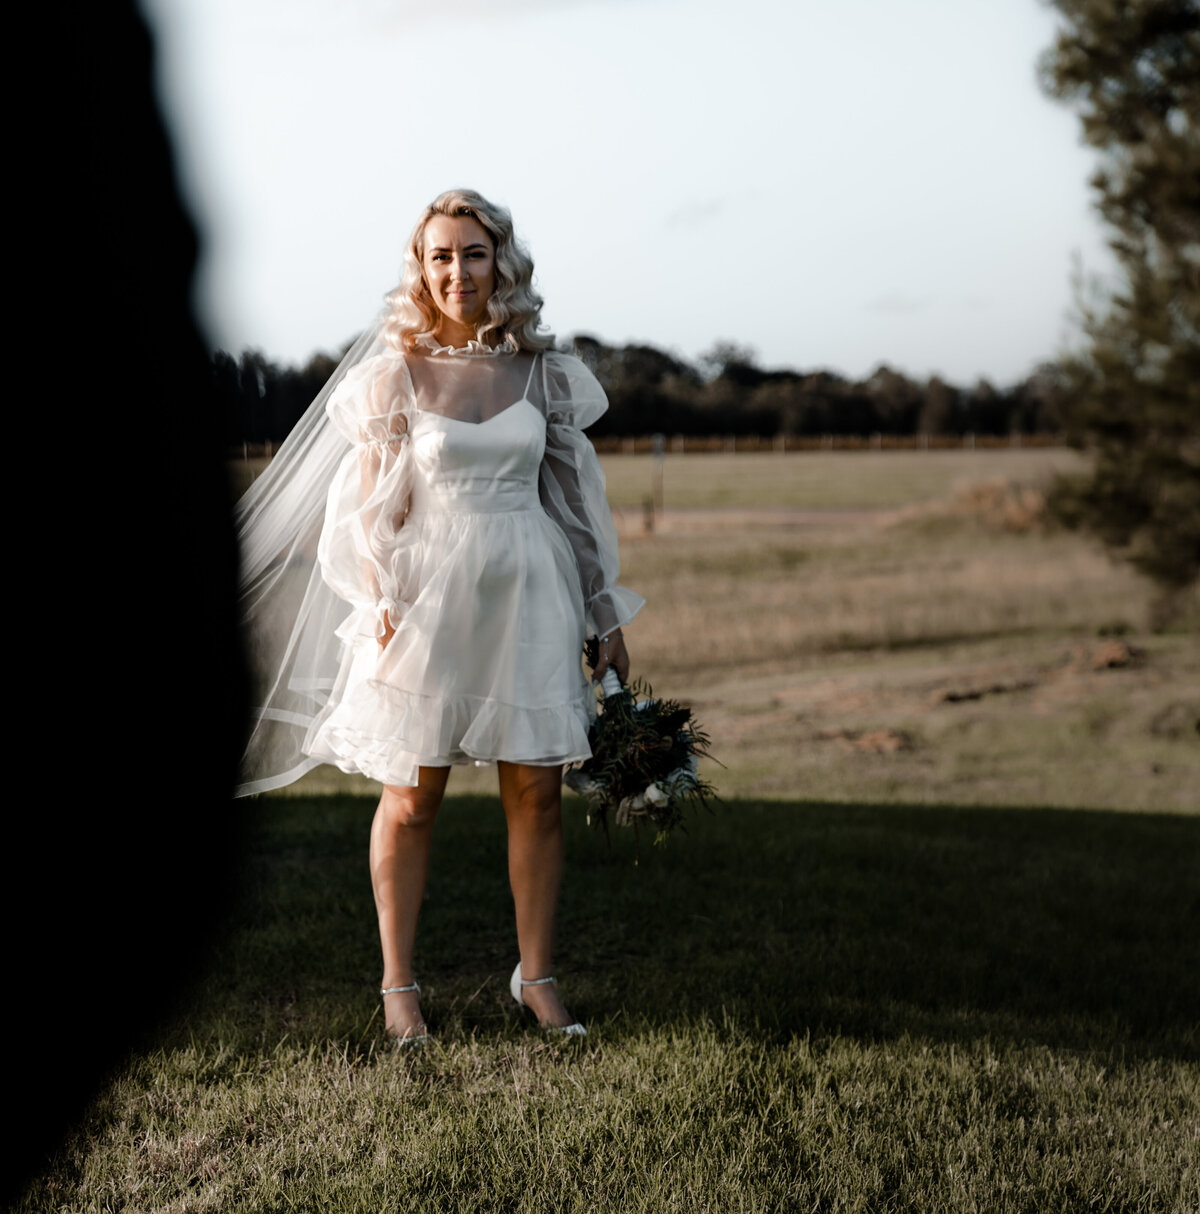 Katie & Trent Wedding - Peterson House Pokolbin - Roam Ahead Media 2022 - Wedding videography and photography-687